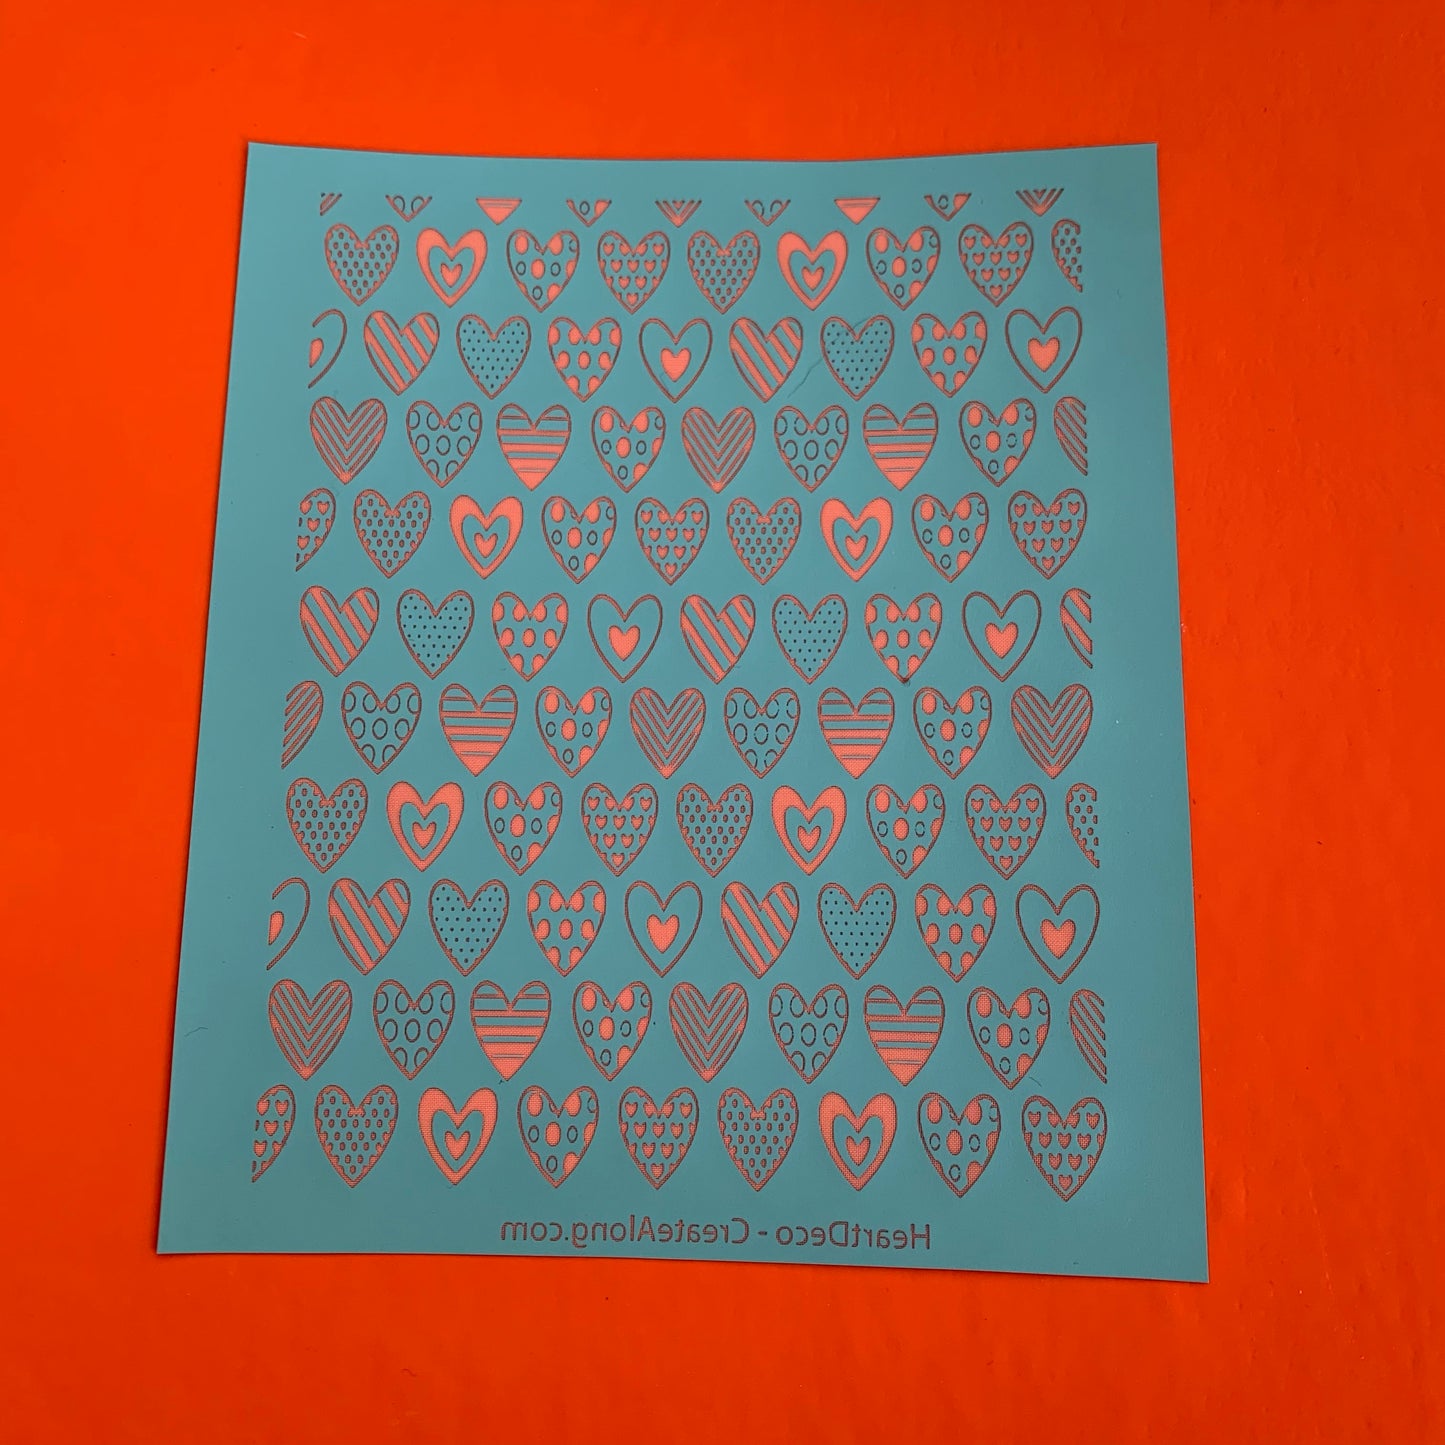 Silk Screen HeartDeco Stencil For Polymer Clay